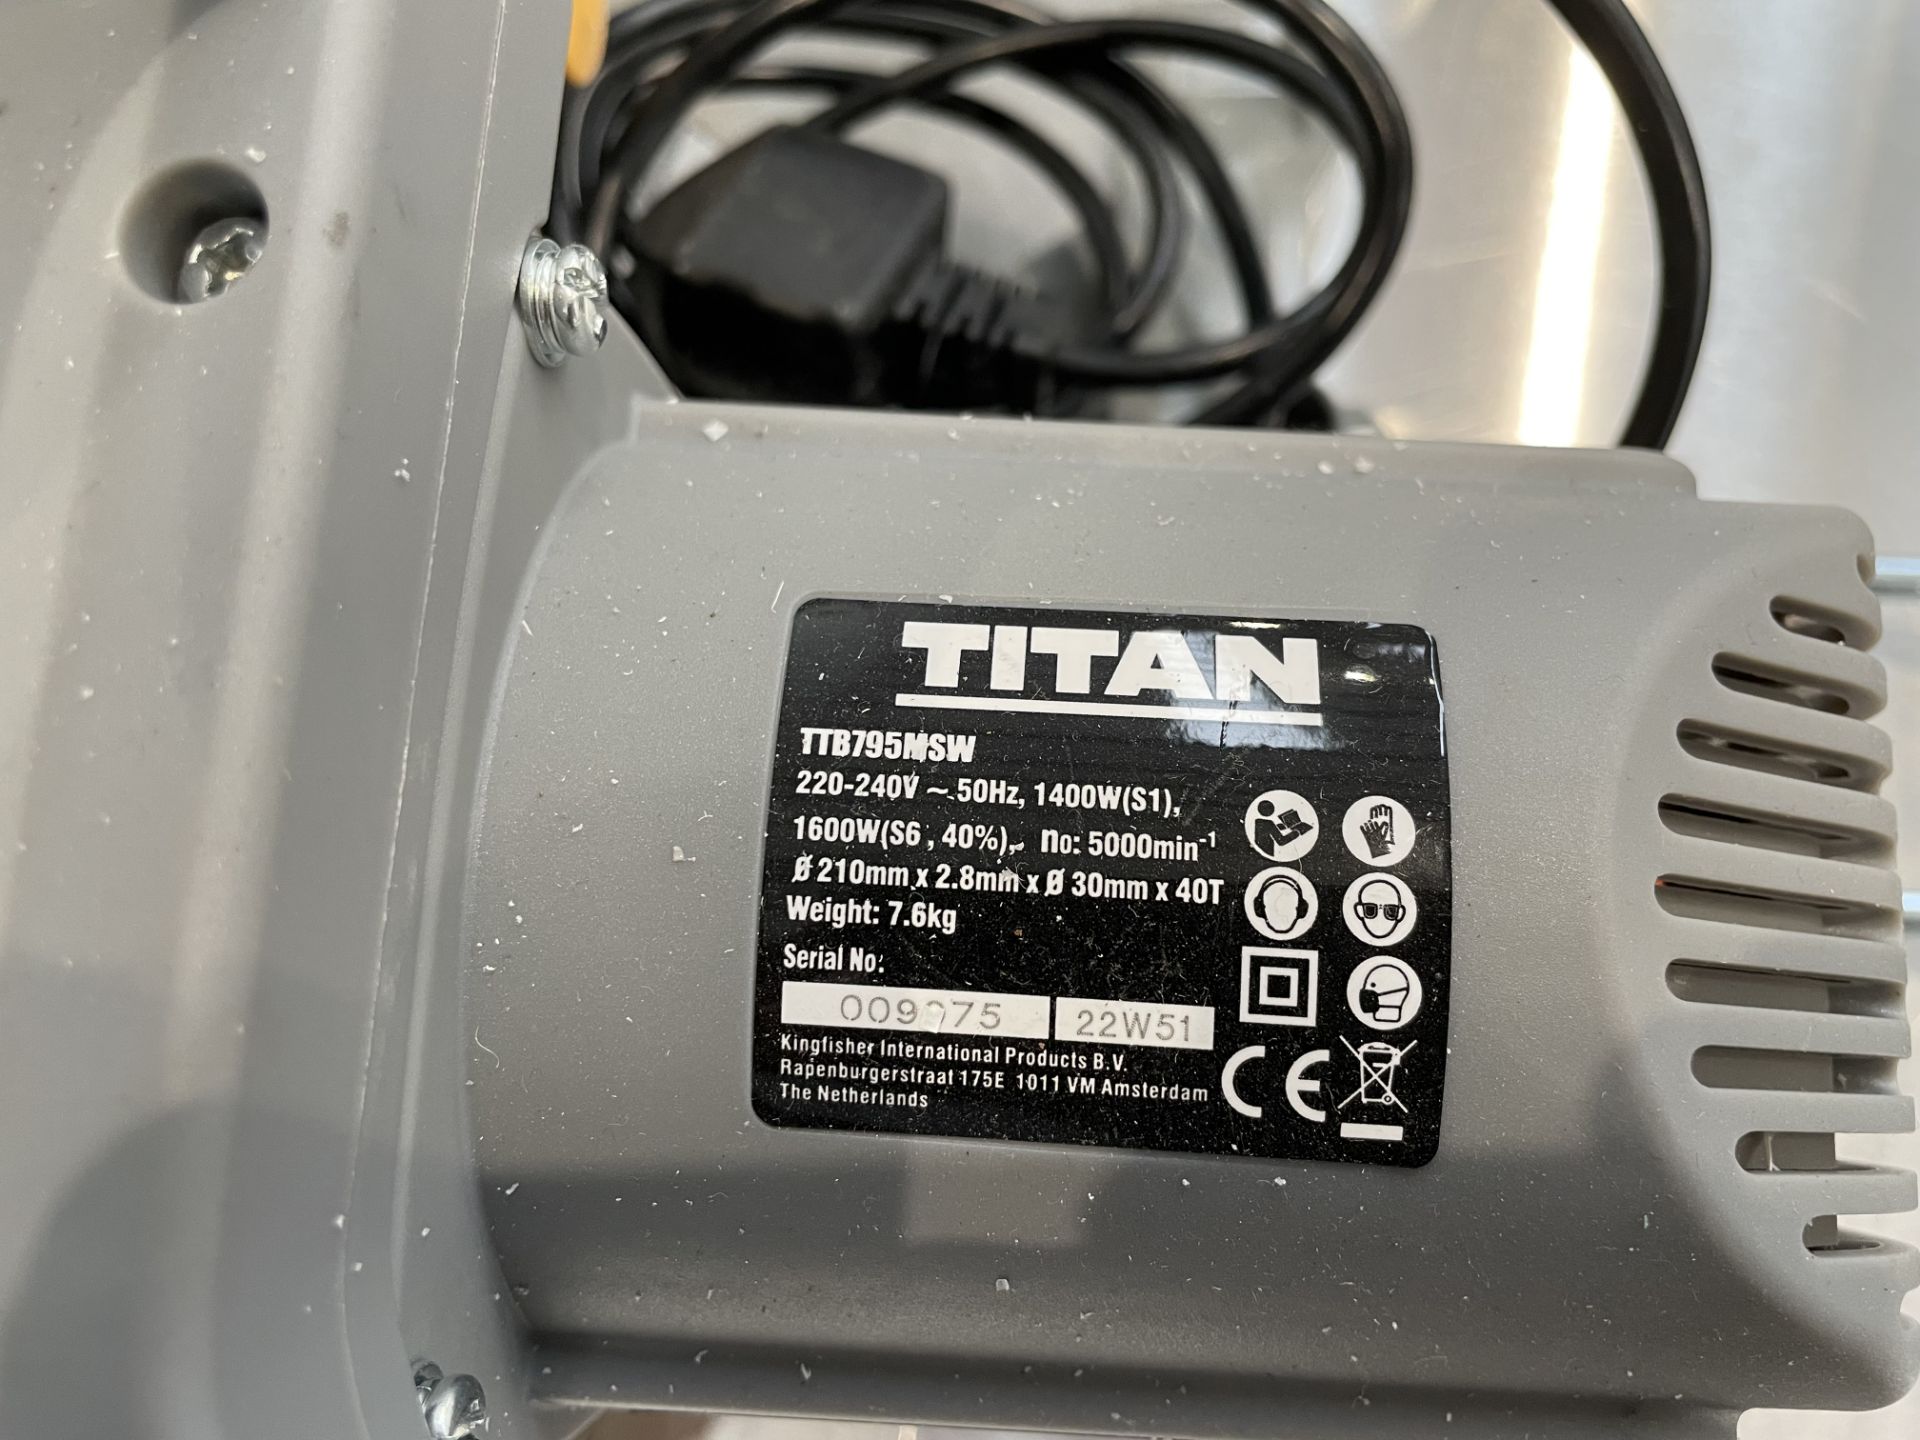 Titan TTB795MSW 1400 Watt Saw - Image 2 of 2